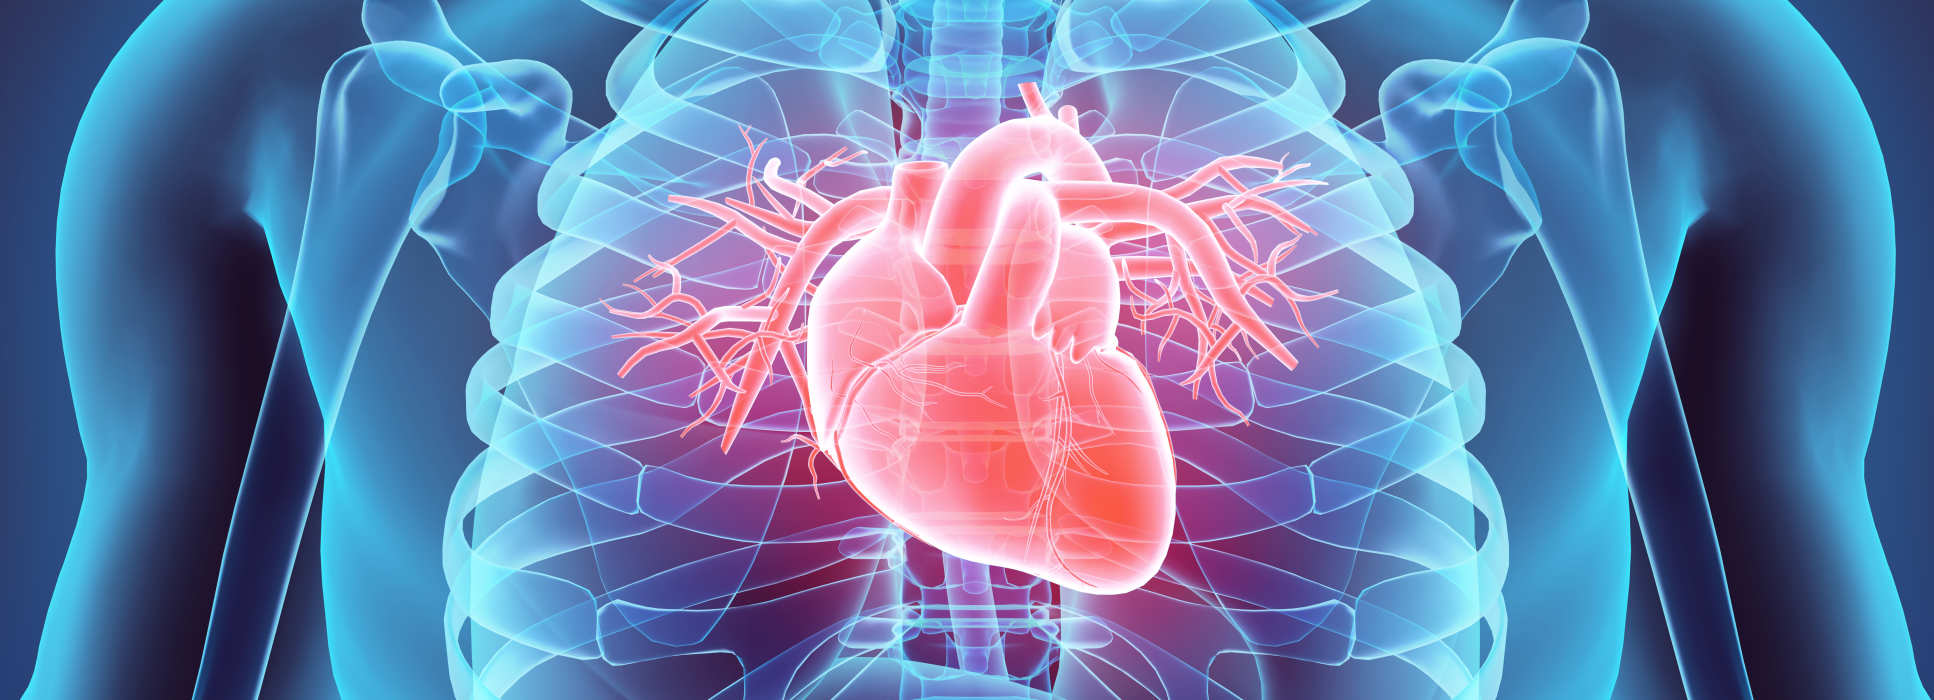 A 3D illustration of a heart